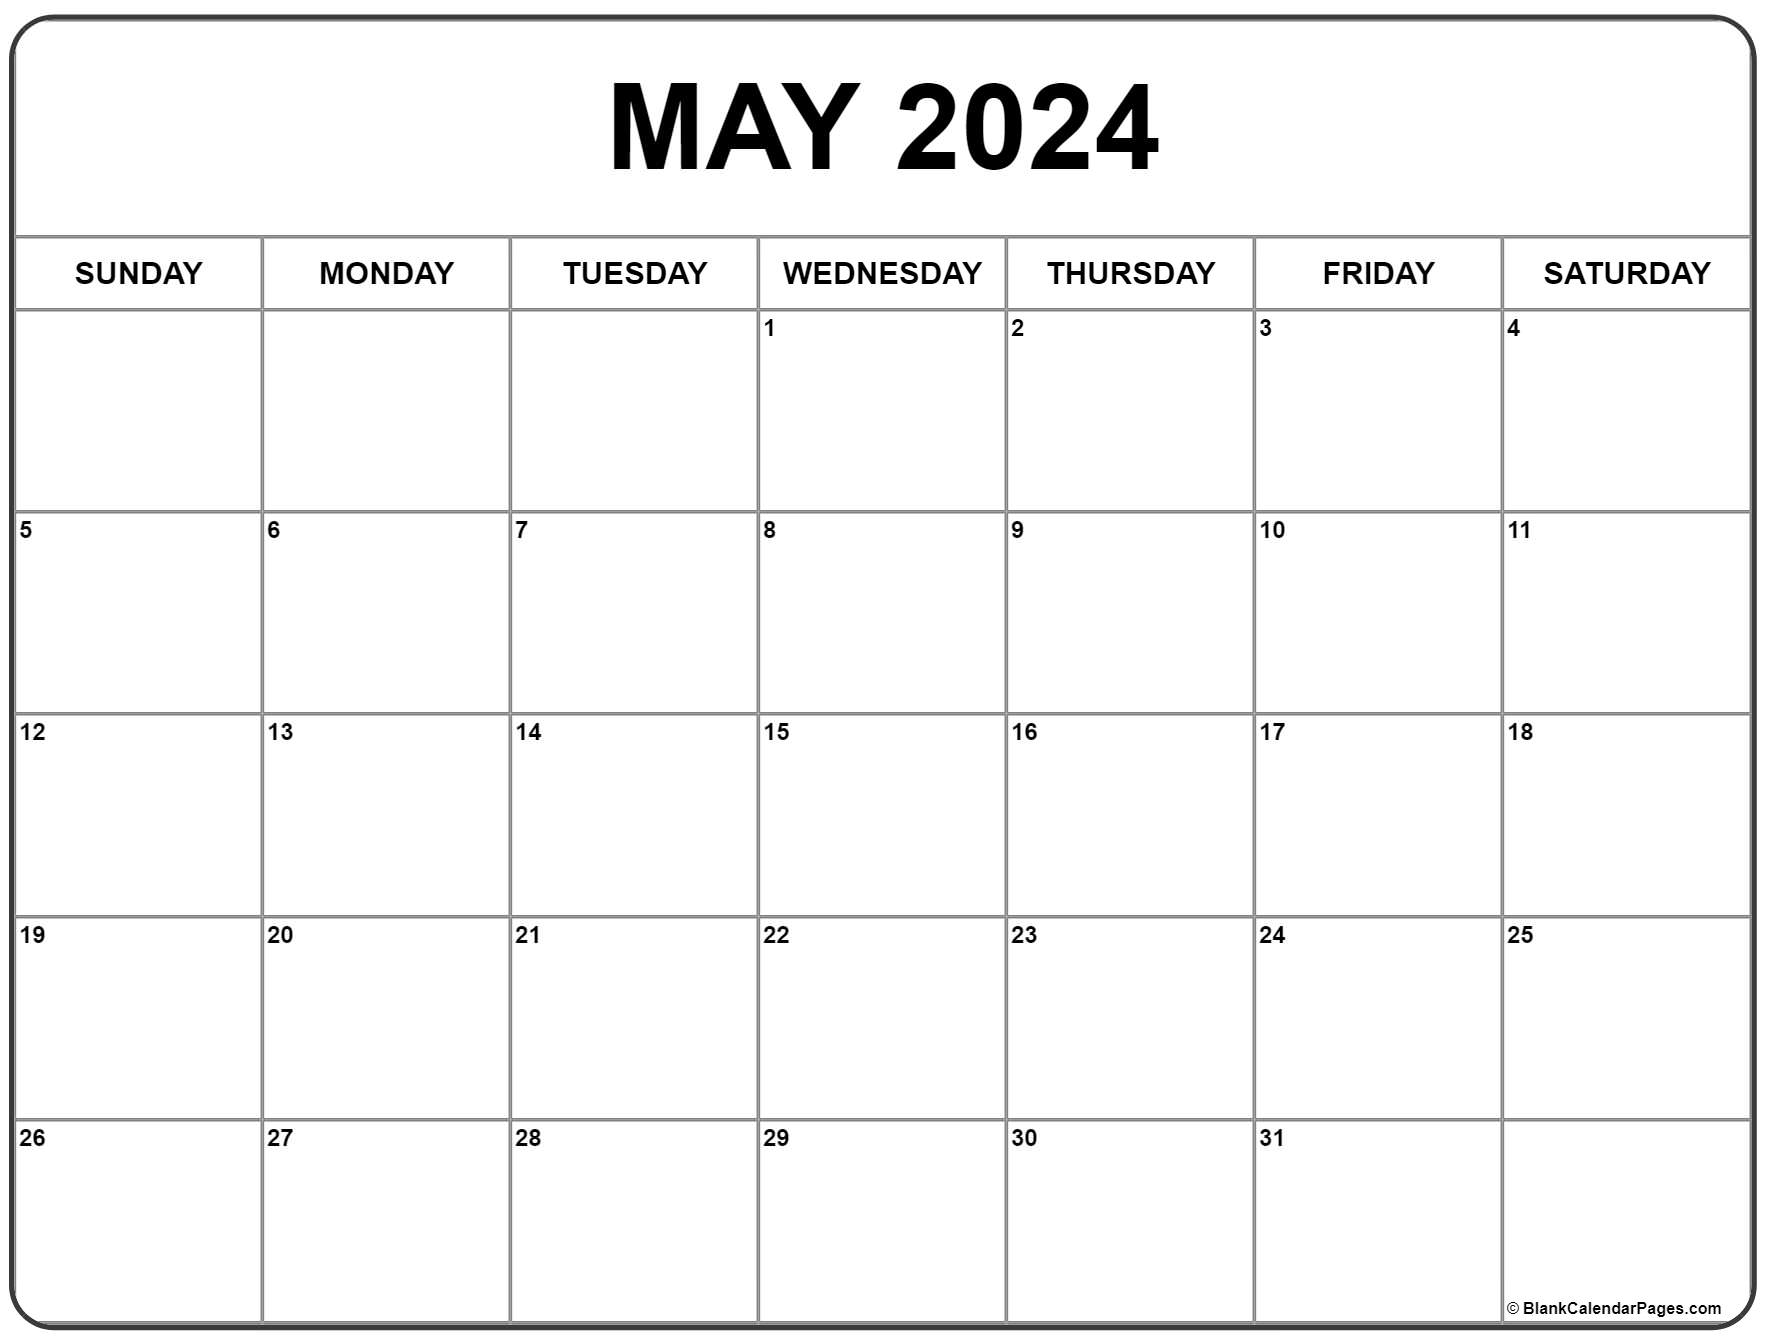 May 2024 Calendar | Free Printable Calendar for May 2024 Calendar Printable